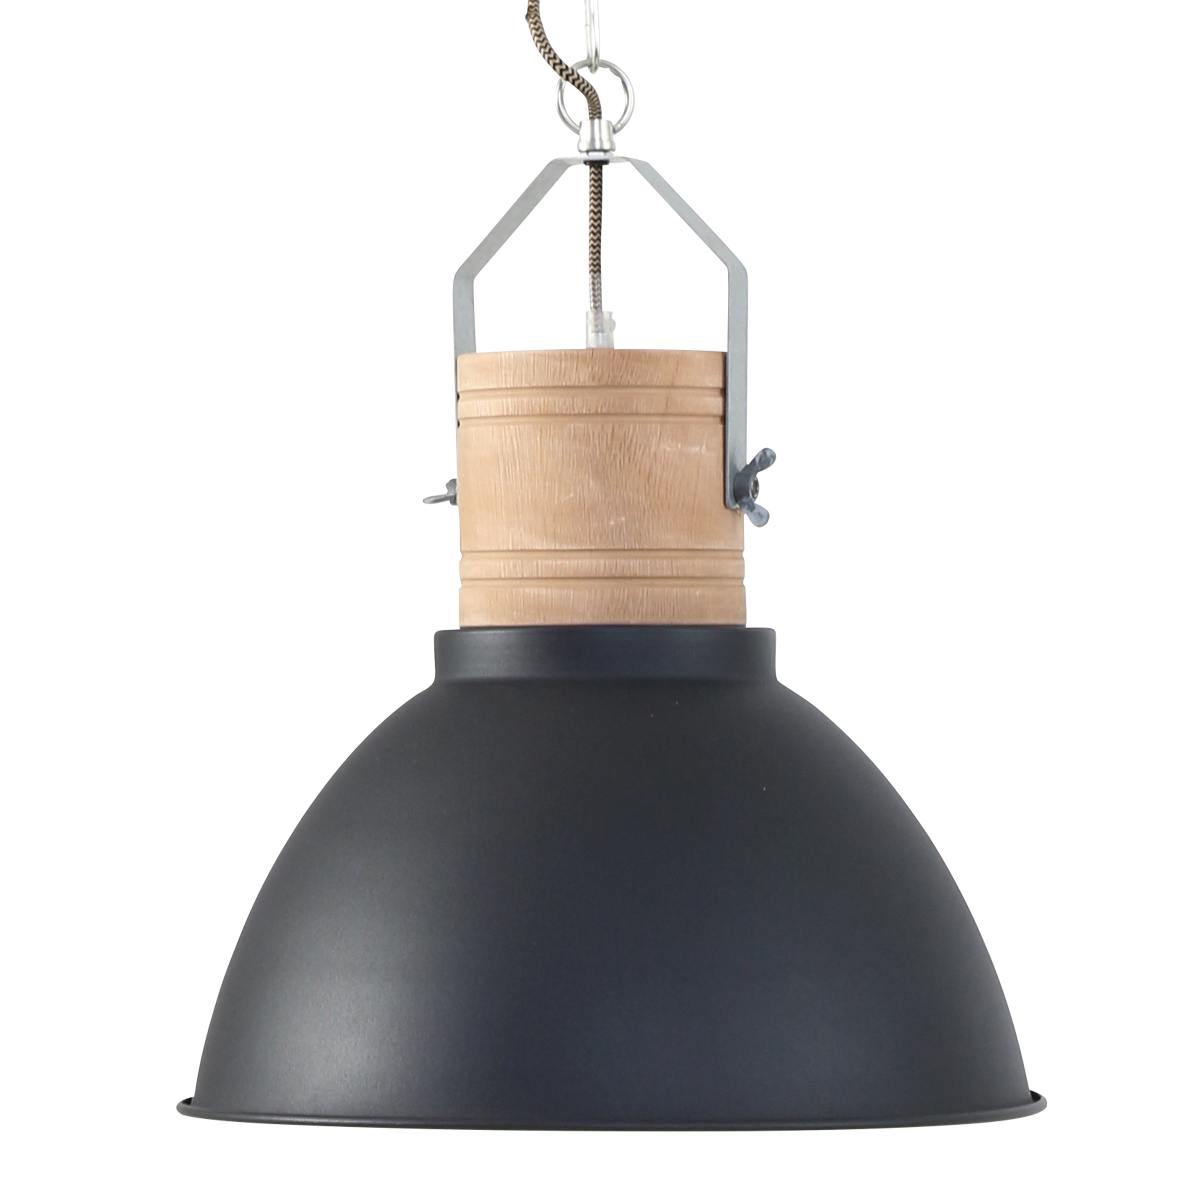 Super Industriele hanglamp zwart/hout MEXLITE - 7781ZW - Webo Verlichting KY-11